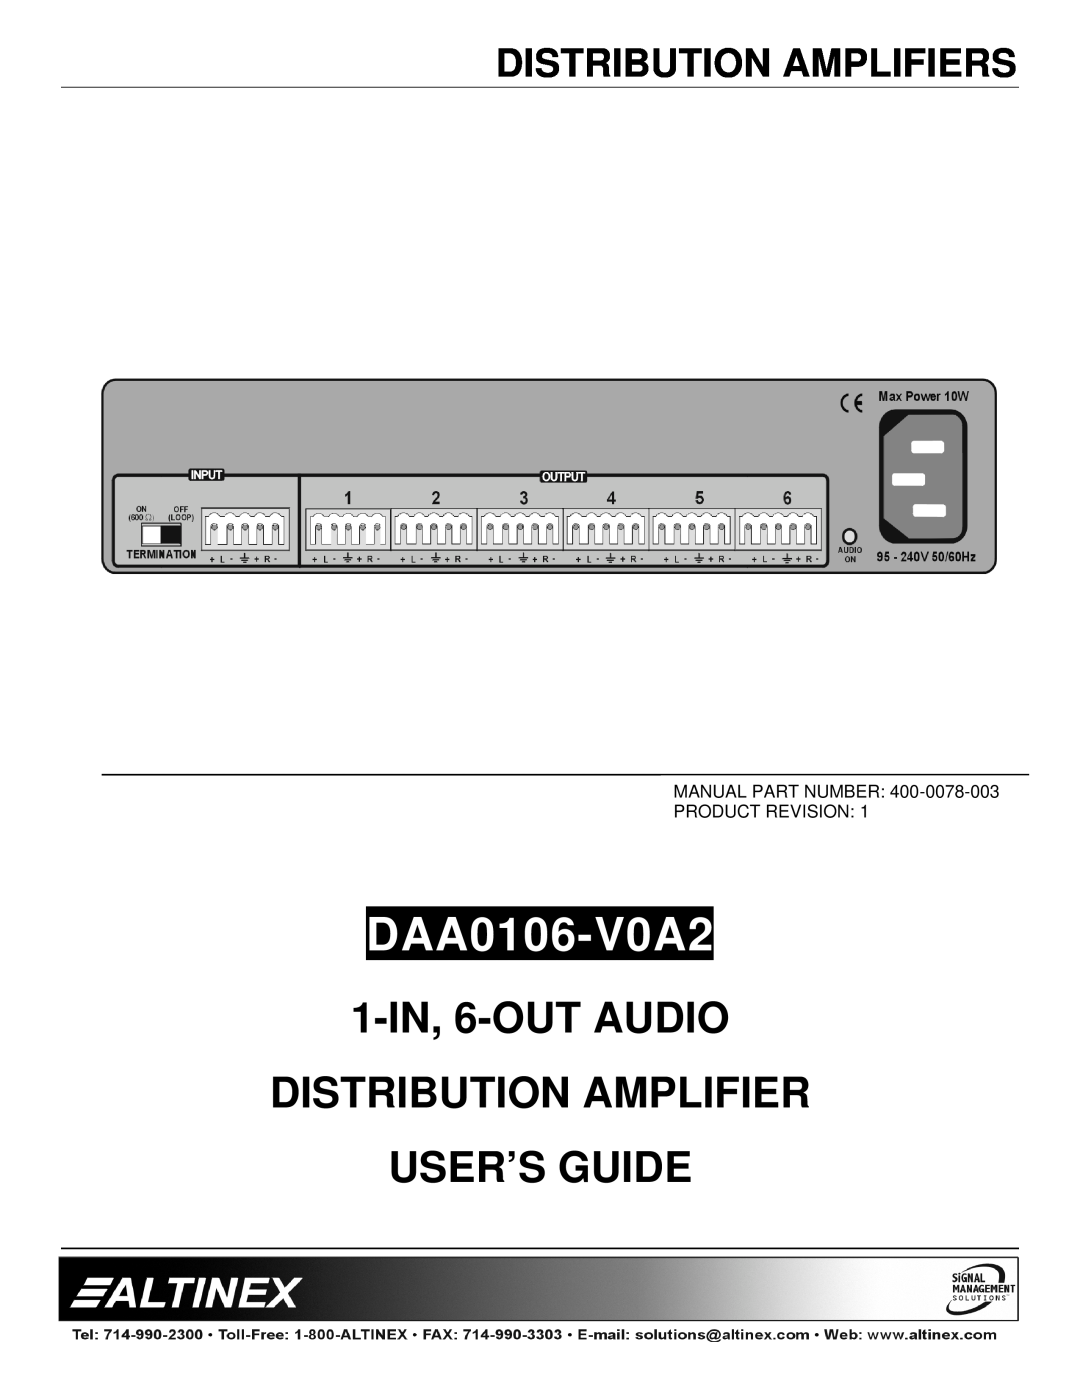 Altinex DAA0106-V0A2 manual Distribution Amplifiers, 1-IN, 6-OUTAUDIO DISTRIBUTION AMPLIFIER, User’S Guide 